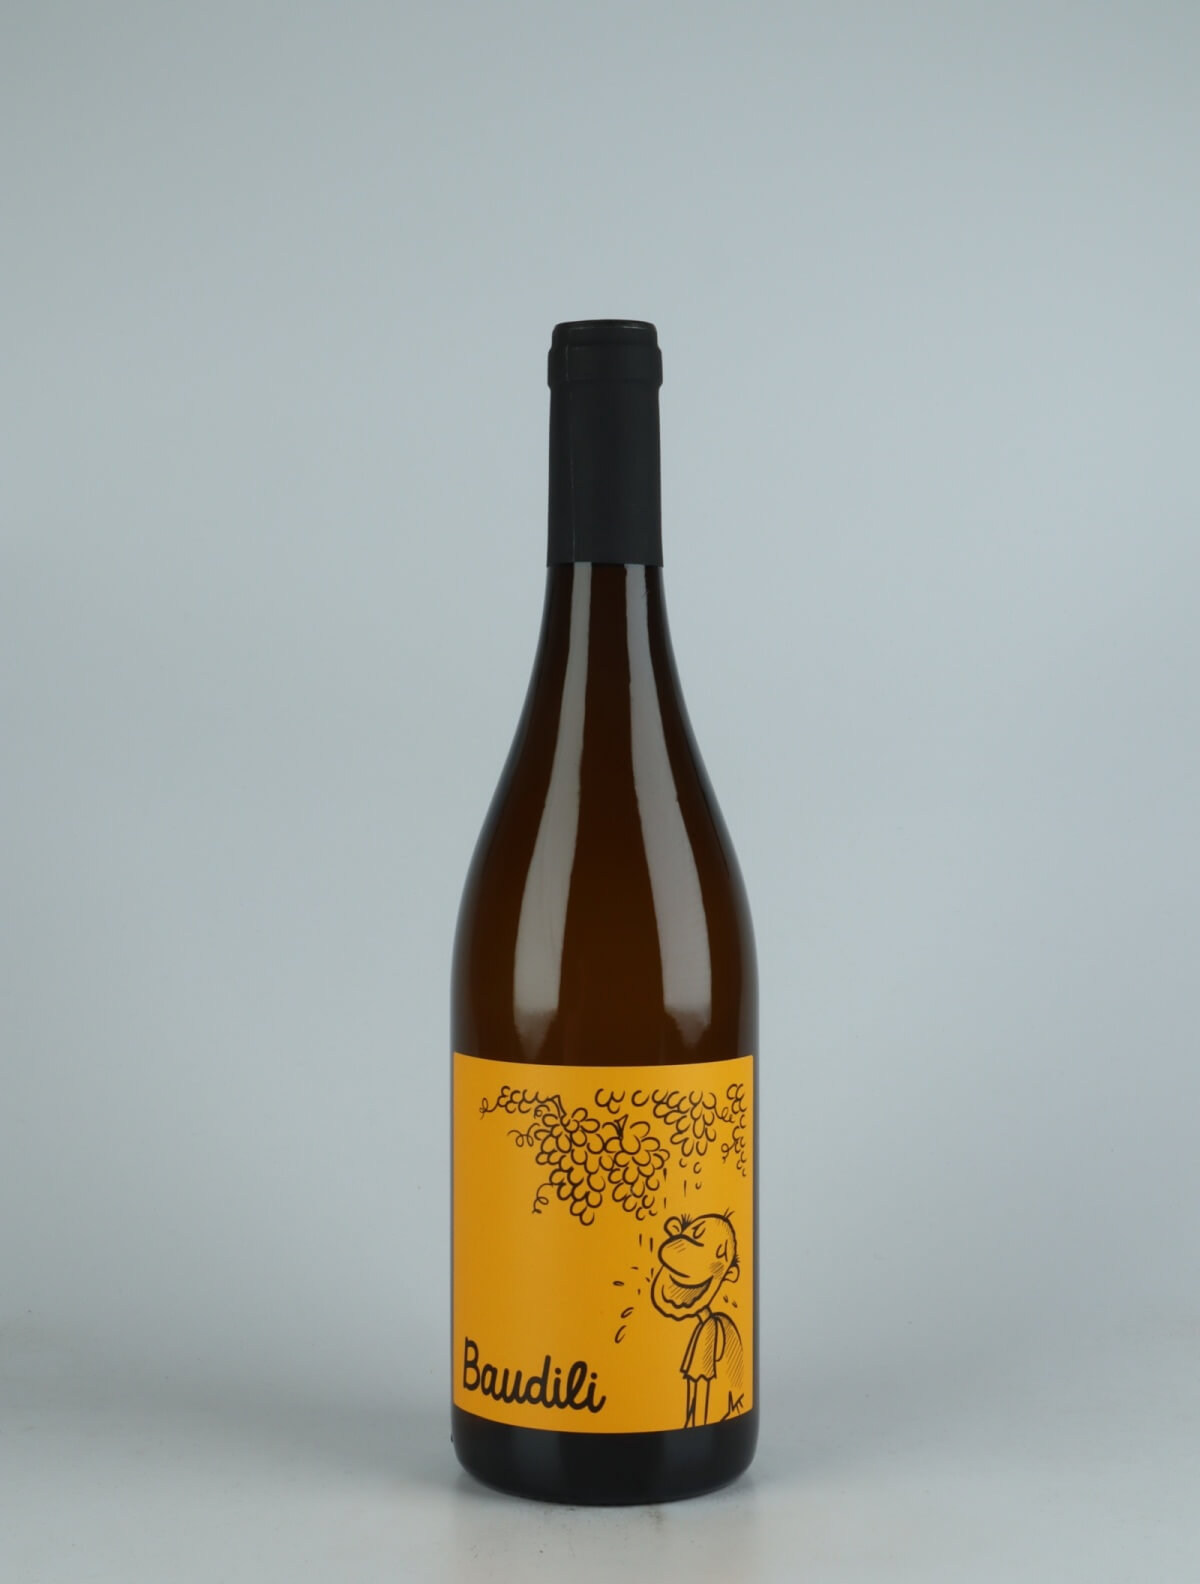 A bottle 2021 Baudili Blanc White wine from Mas Candí, Penedès in Spain